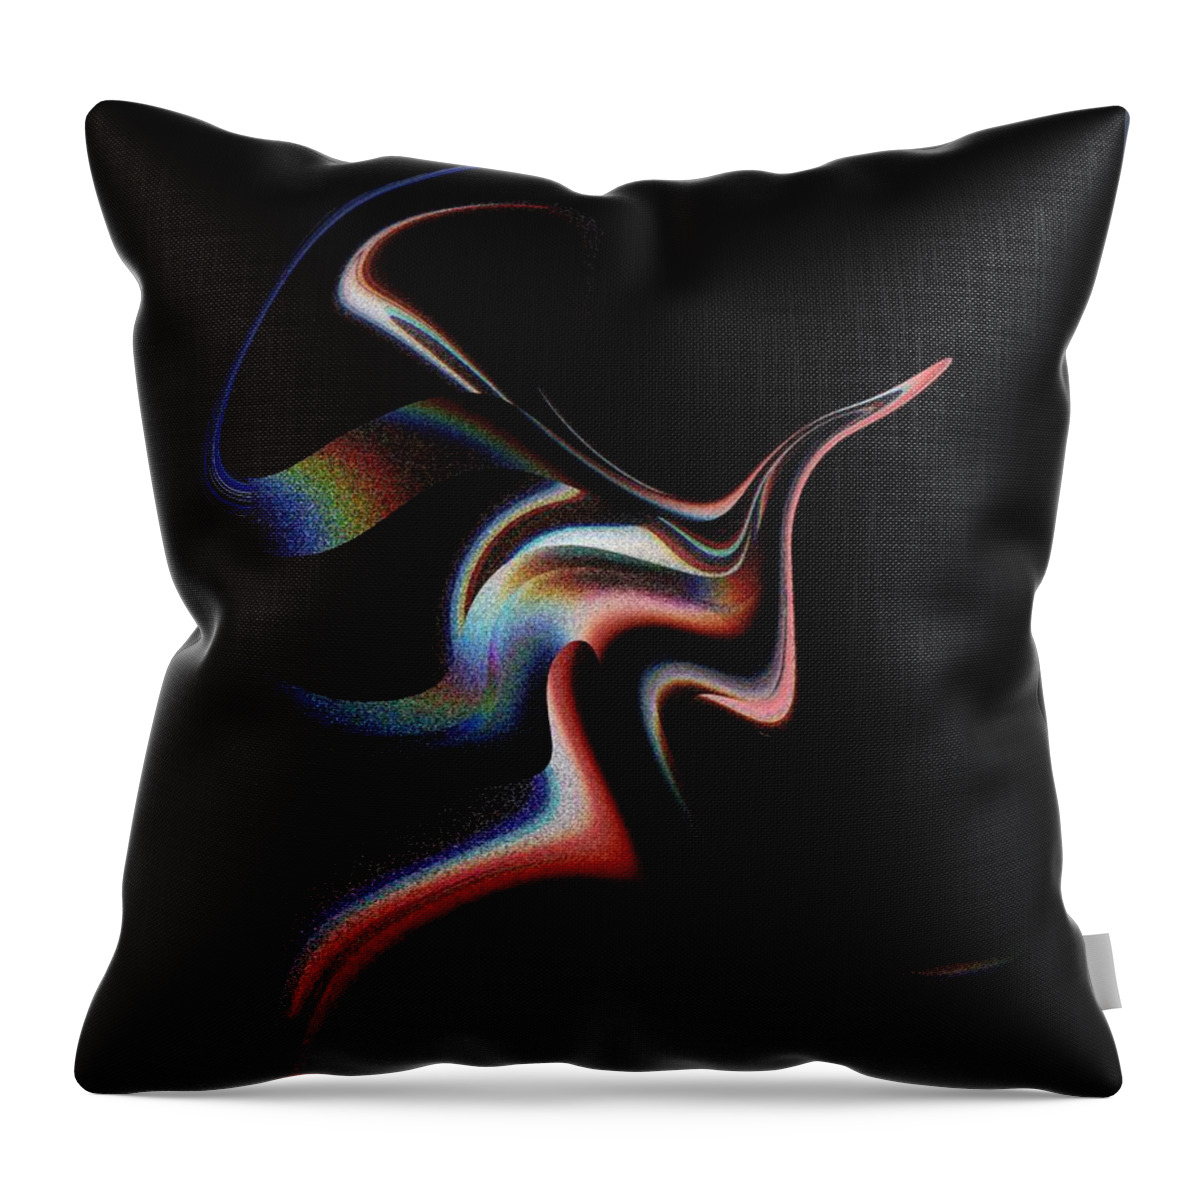  Throw Pillow featuring the digital art Rainbow Strider by Michelle Hoffmann